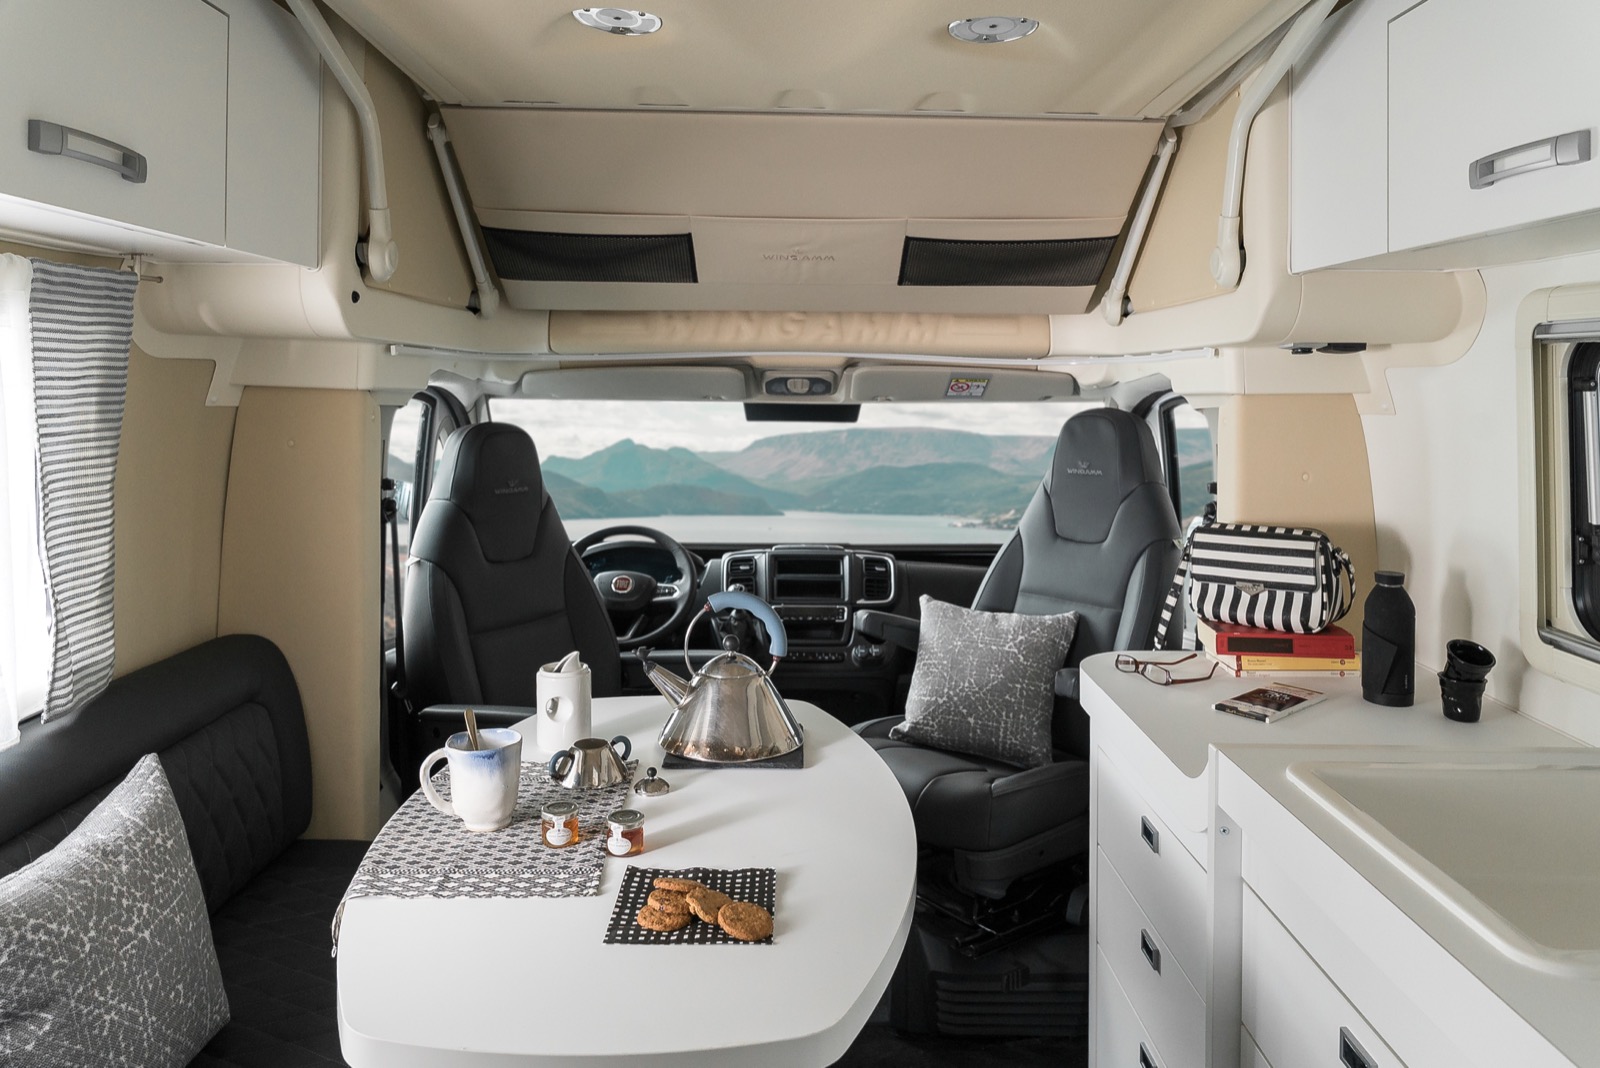 Oasi 540 interior small luxury camper